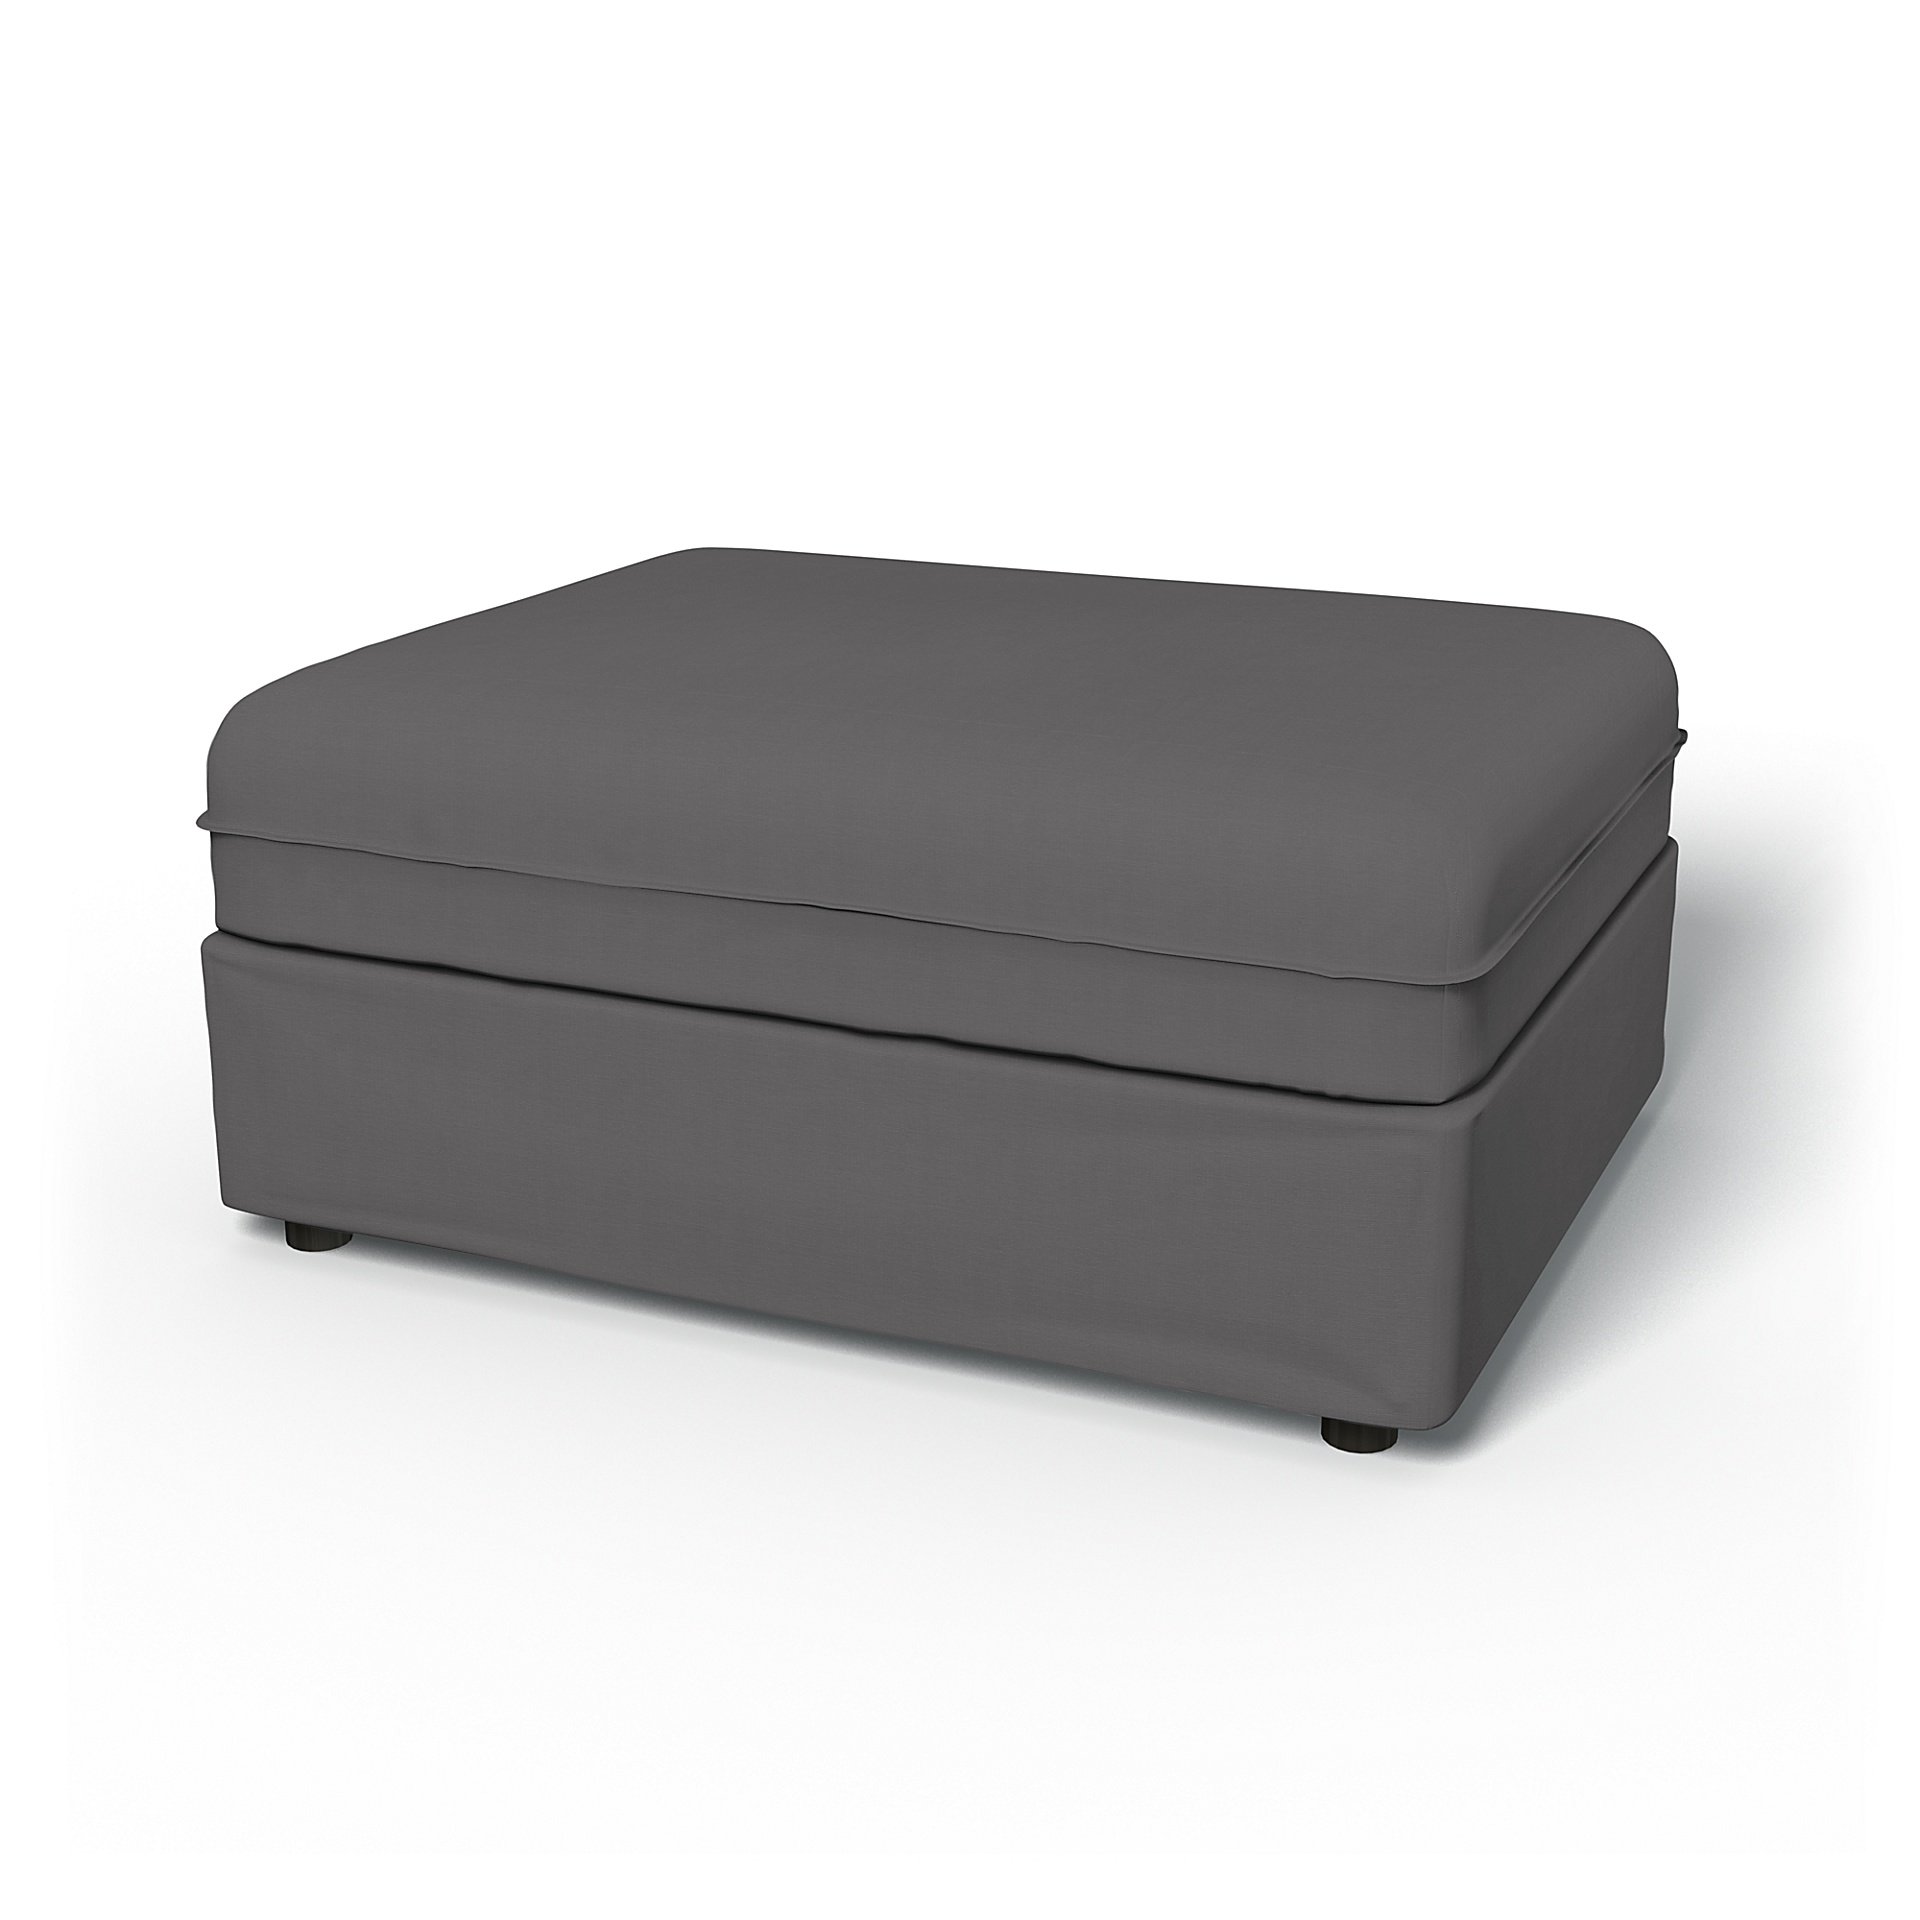 IKEA - Vallentuna Seat Module Cover 100x80cm 39x32in, Smoked Pearl, Cotton - Bemz